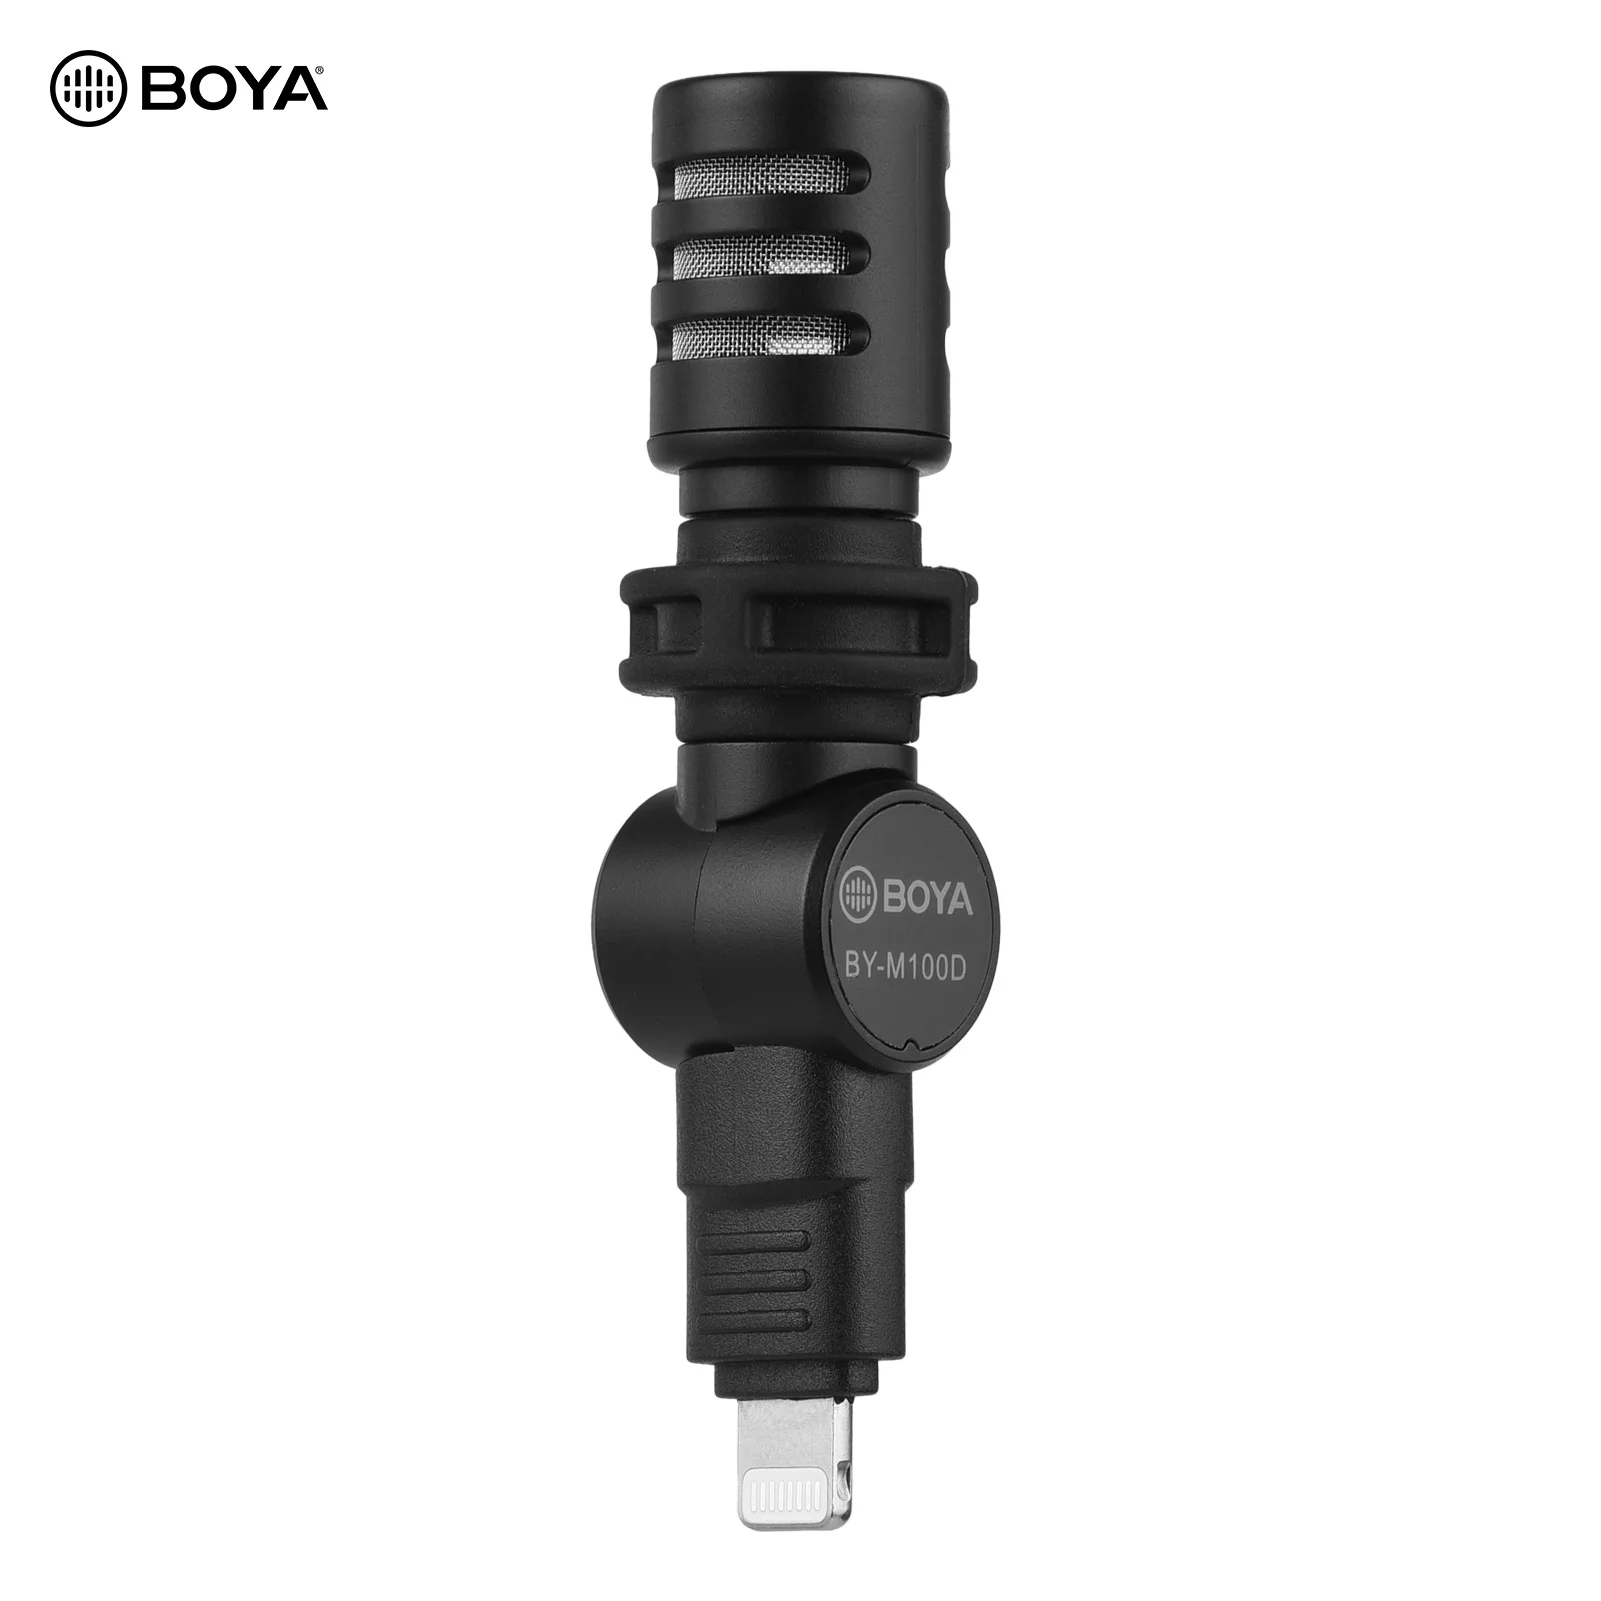 

BOYA BY-M100D мини микрофон для iOS конденсаторный микрофон конденсаторный соединитель складной без батареи пена сумка для переноски ветрового ст...